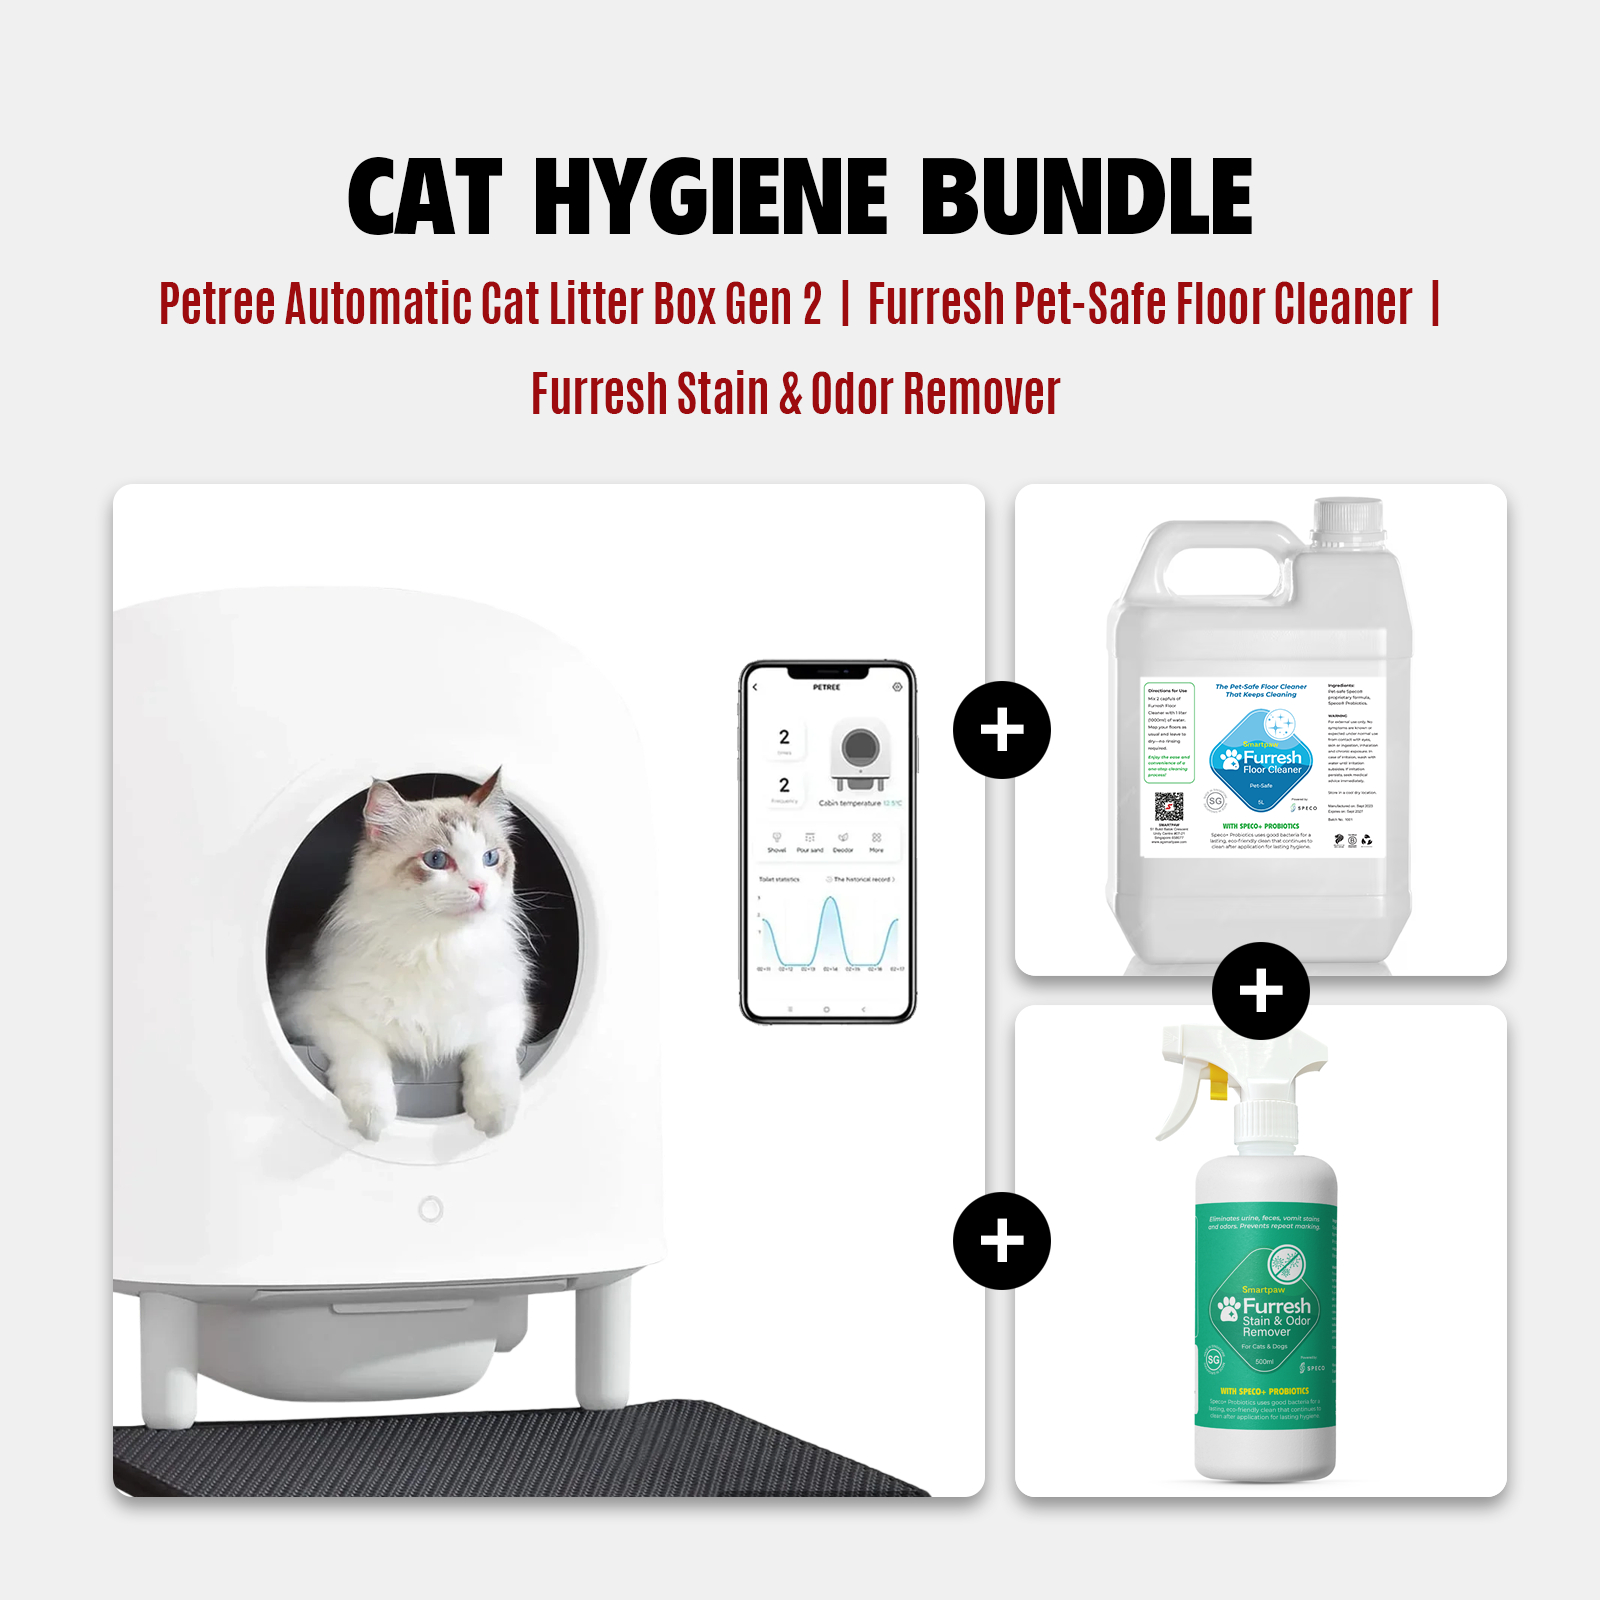 Cat Hygiene Bundle